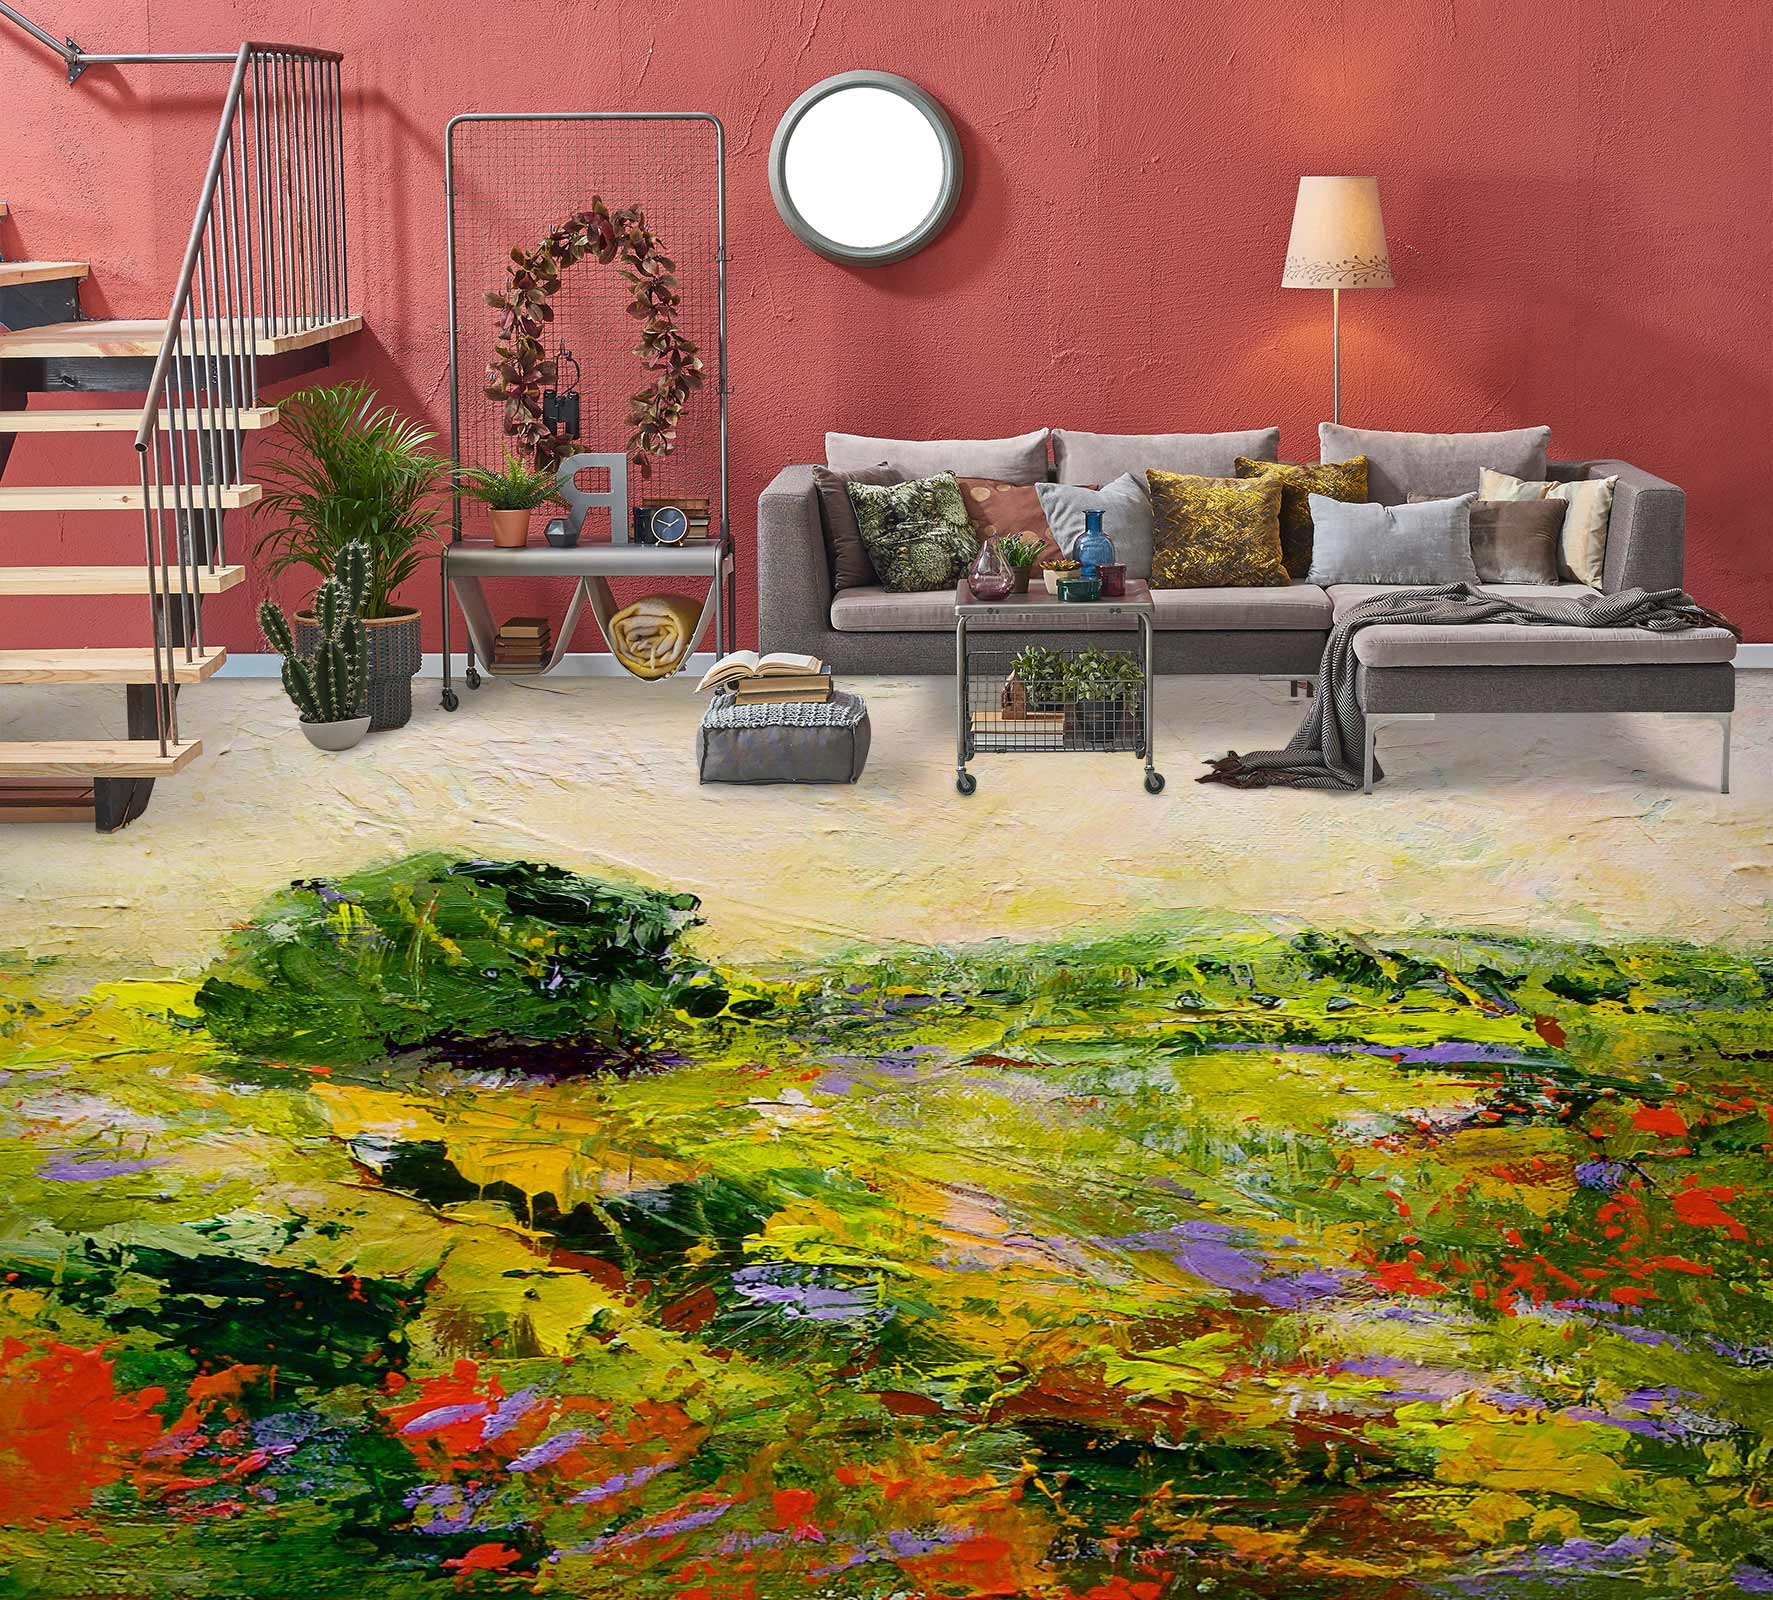 3D Grass Flowers Oil Painting 9653 Allan P. Friedlander Floor Mural